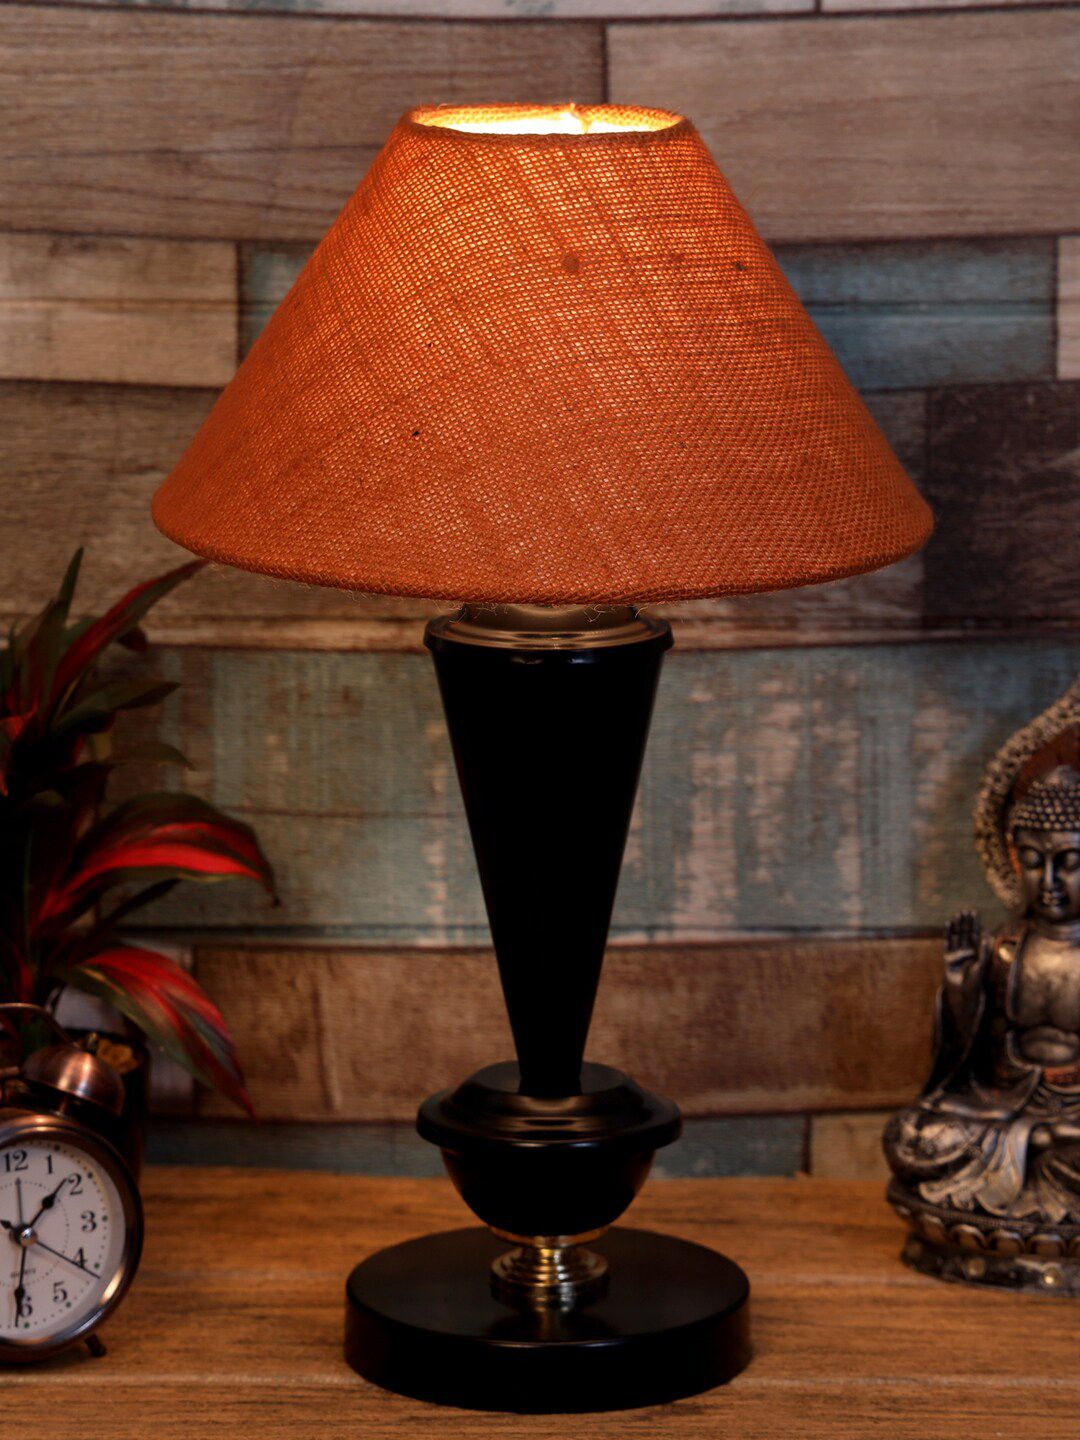 foziq Black & Orange Colored Textured Table Lamp Price in India